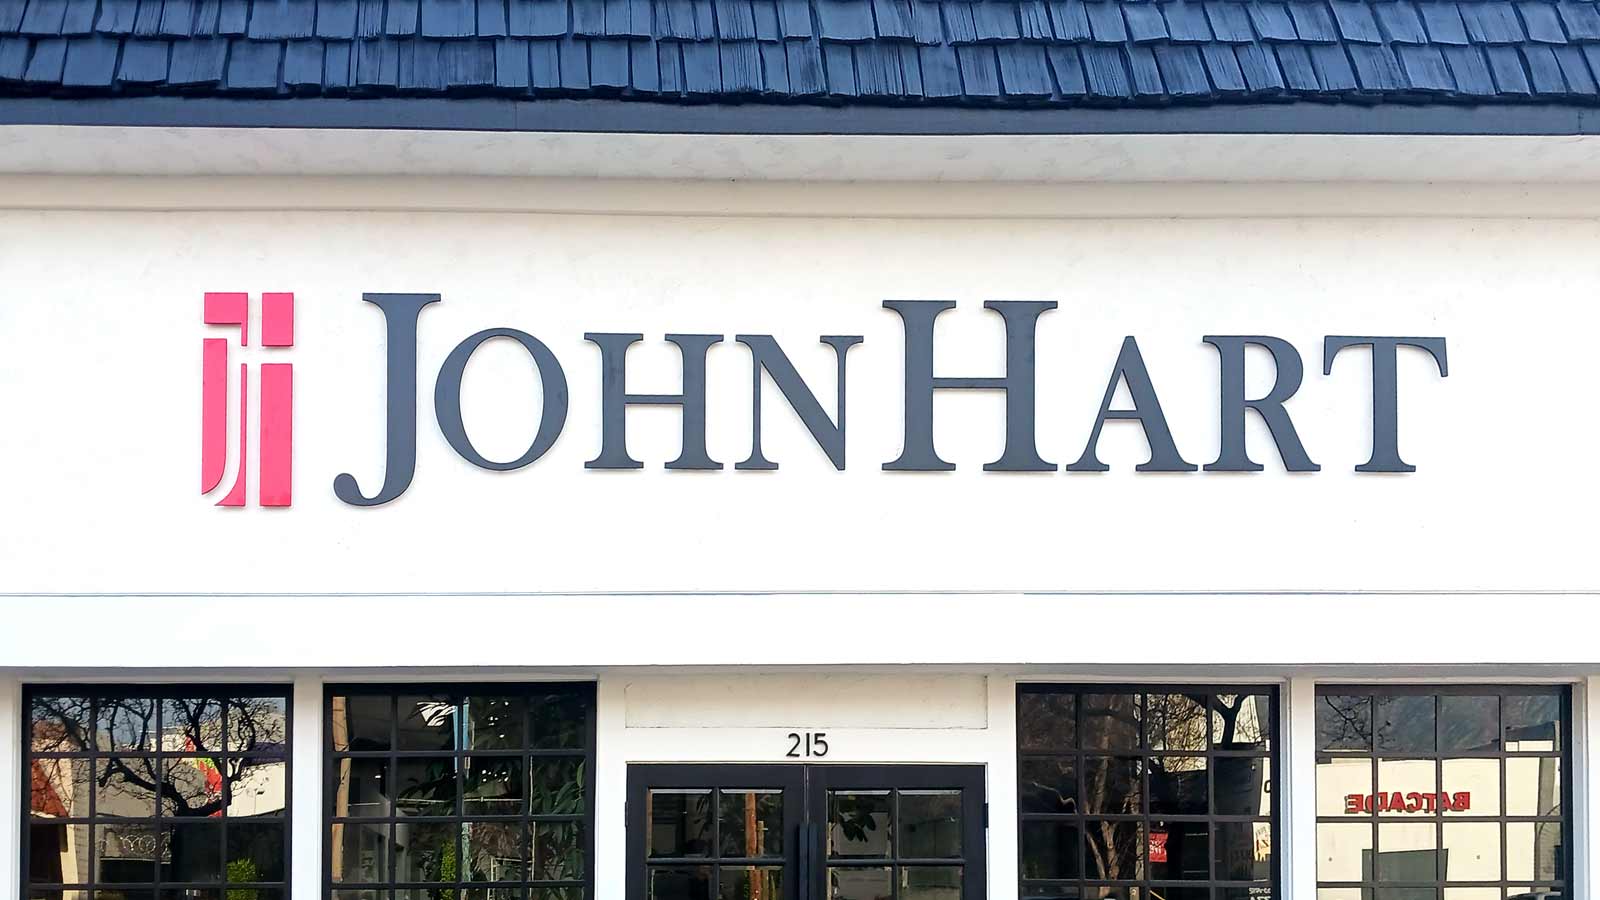 john hart realty logo sign installed outdoors